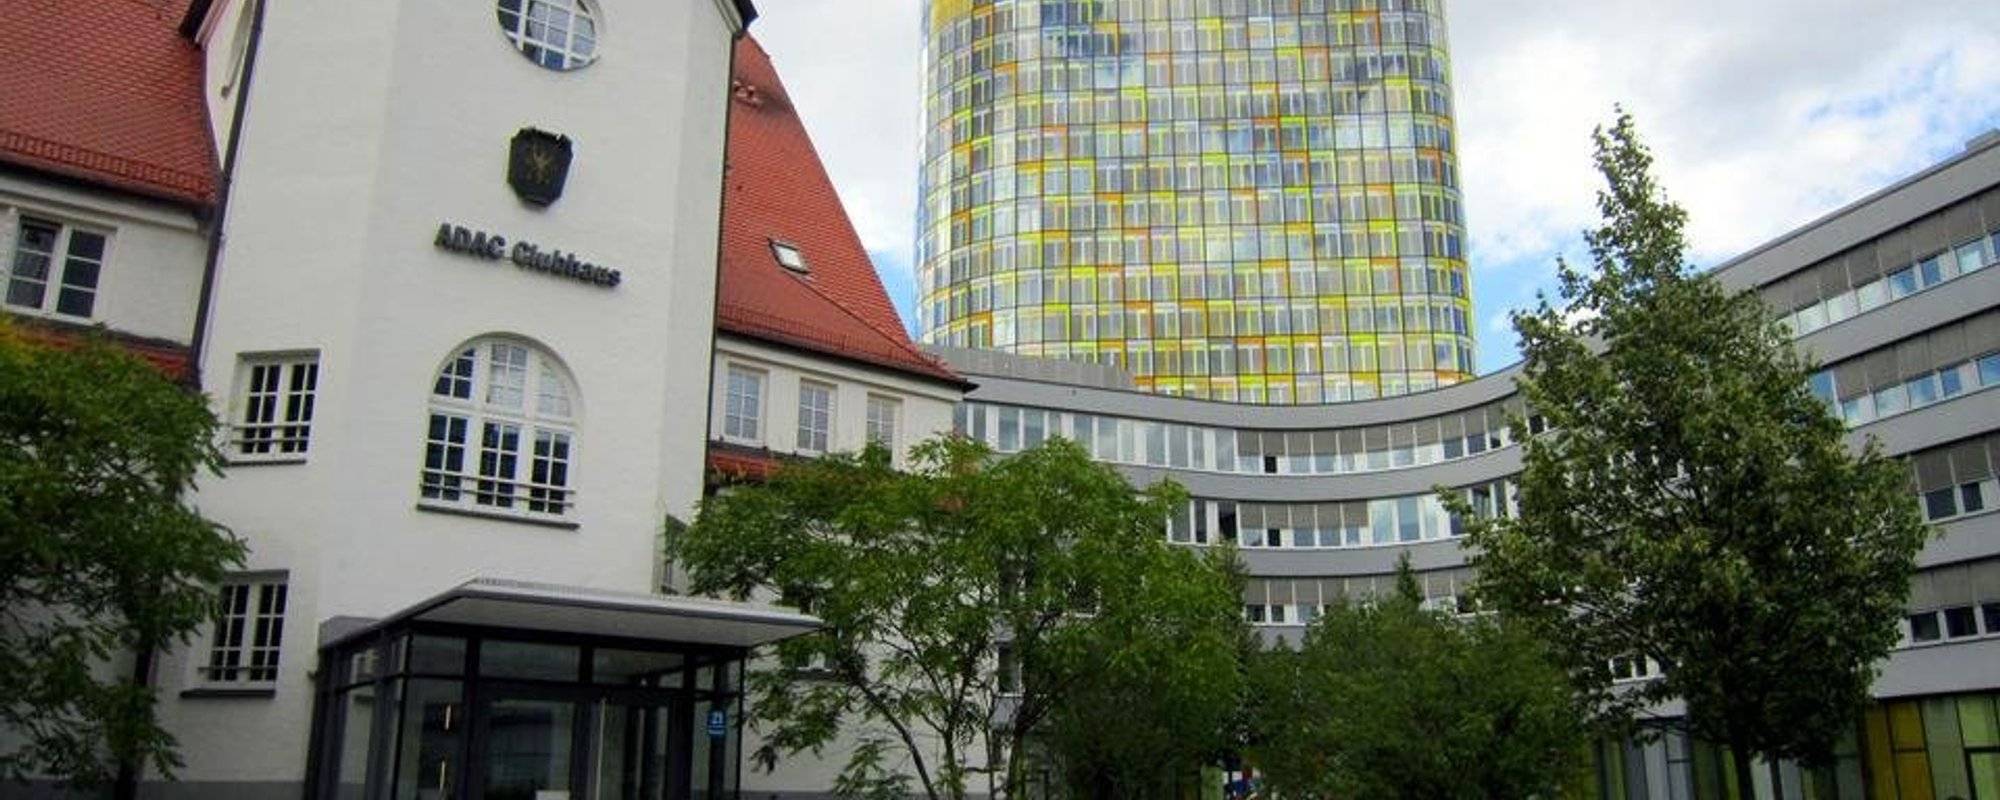 The ADAC Building, in Munich (Germany)